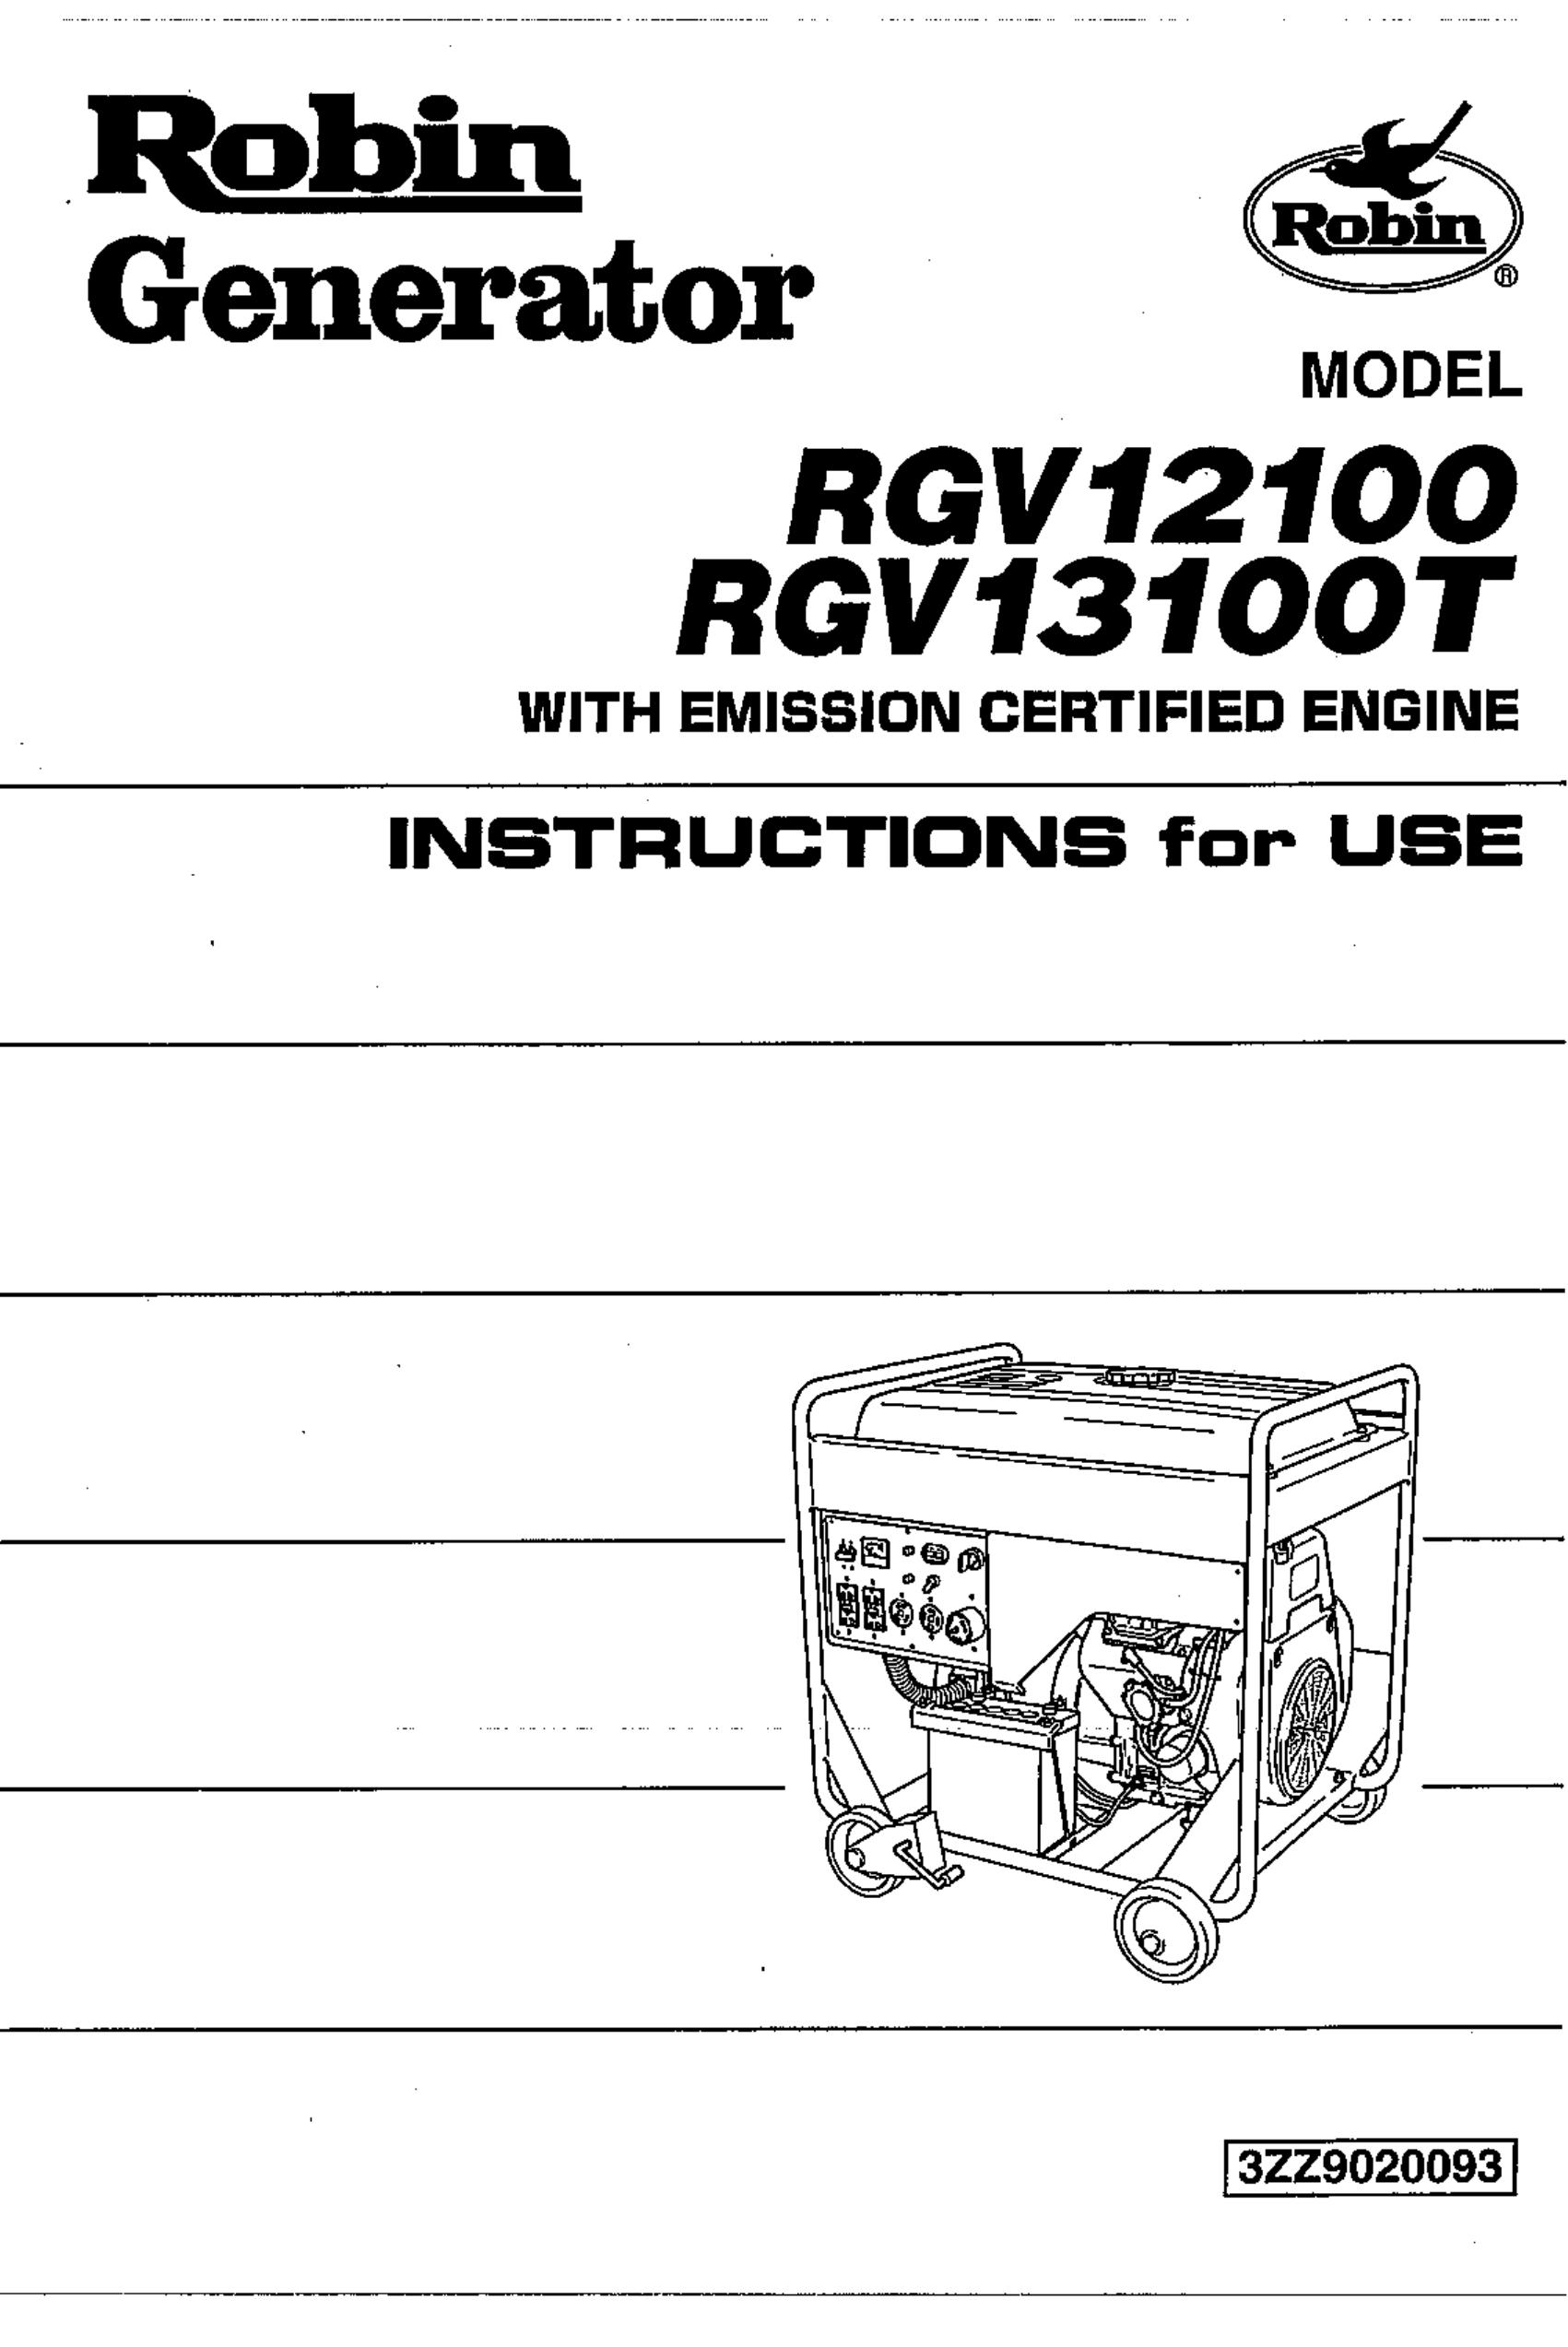 Subaru Robin Power Products R1700 Portable Generator User Manual